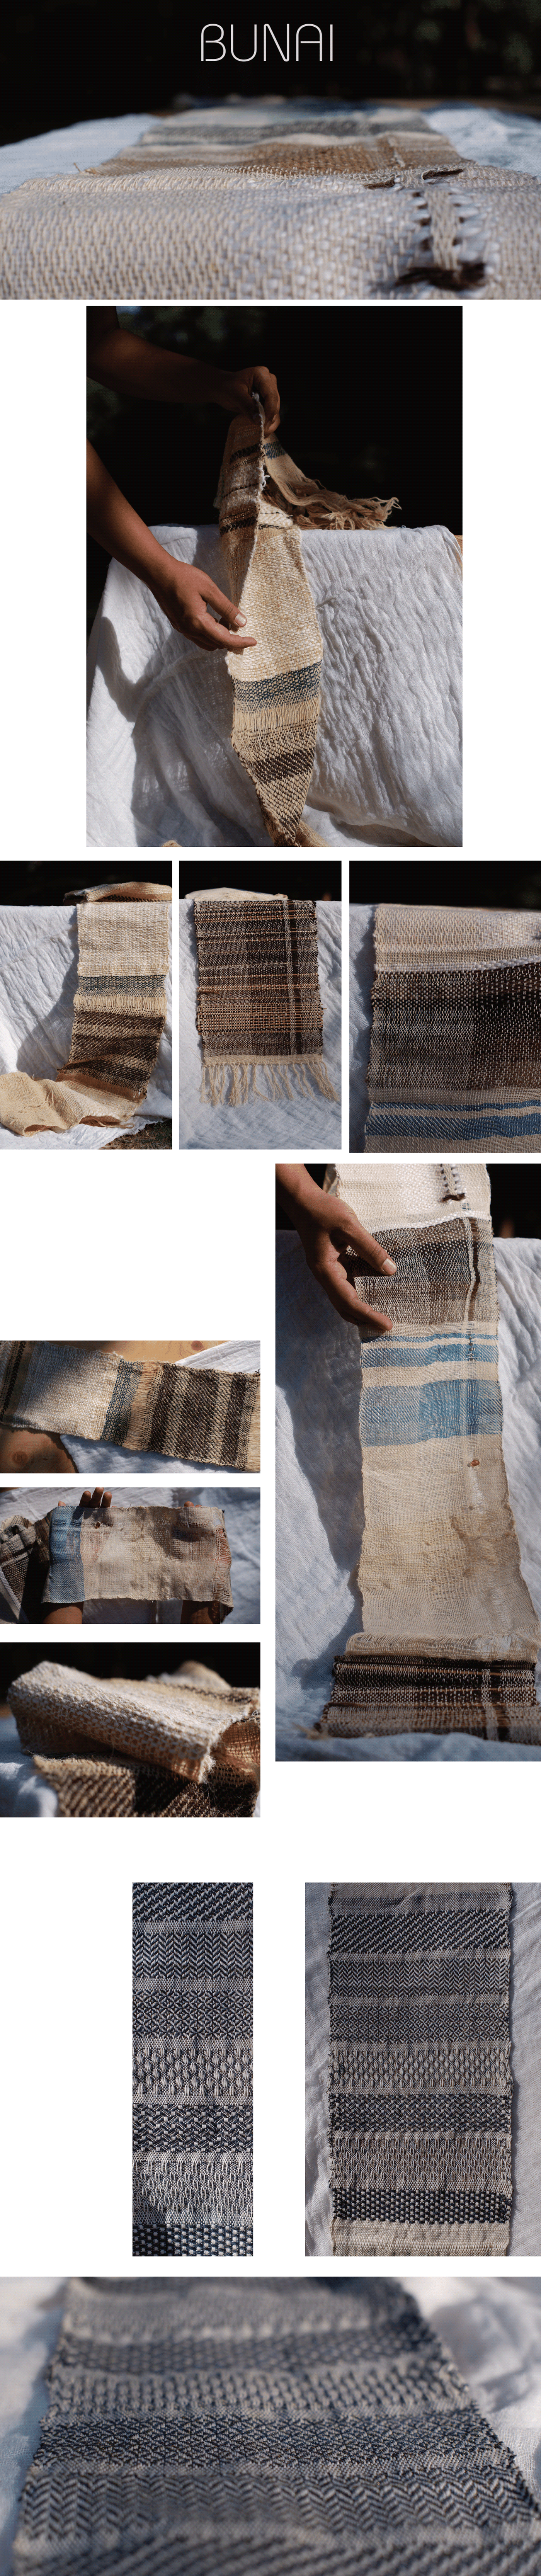 loom textile Handweaving creative exploration wool cotton weaving design